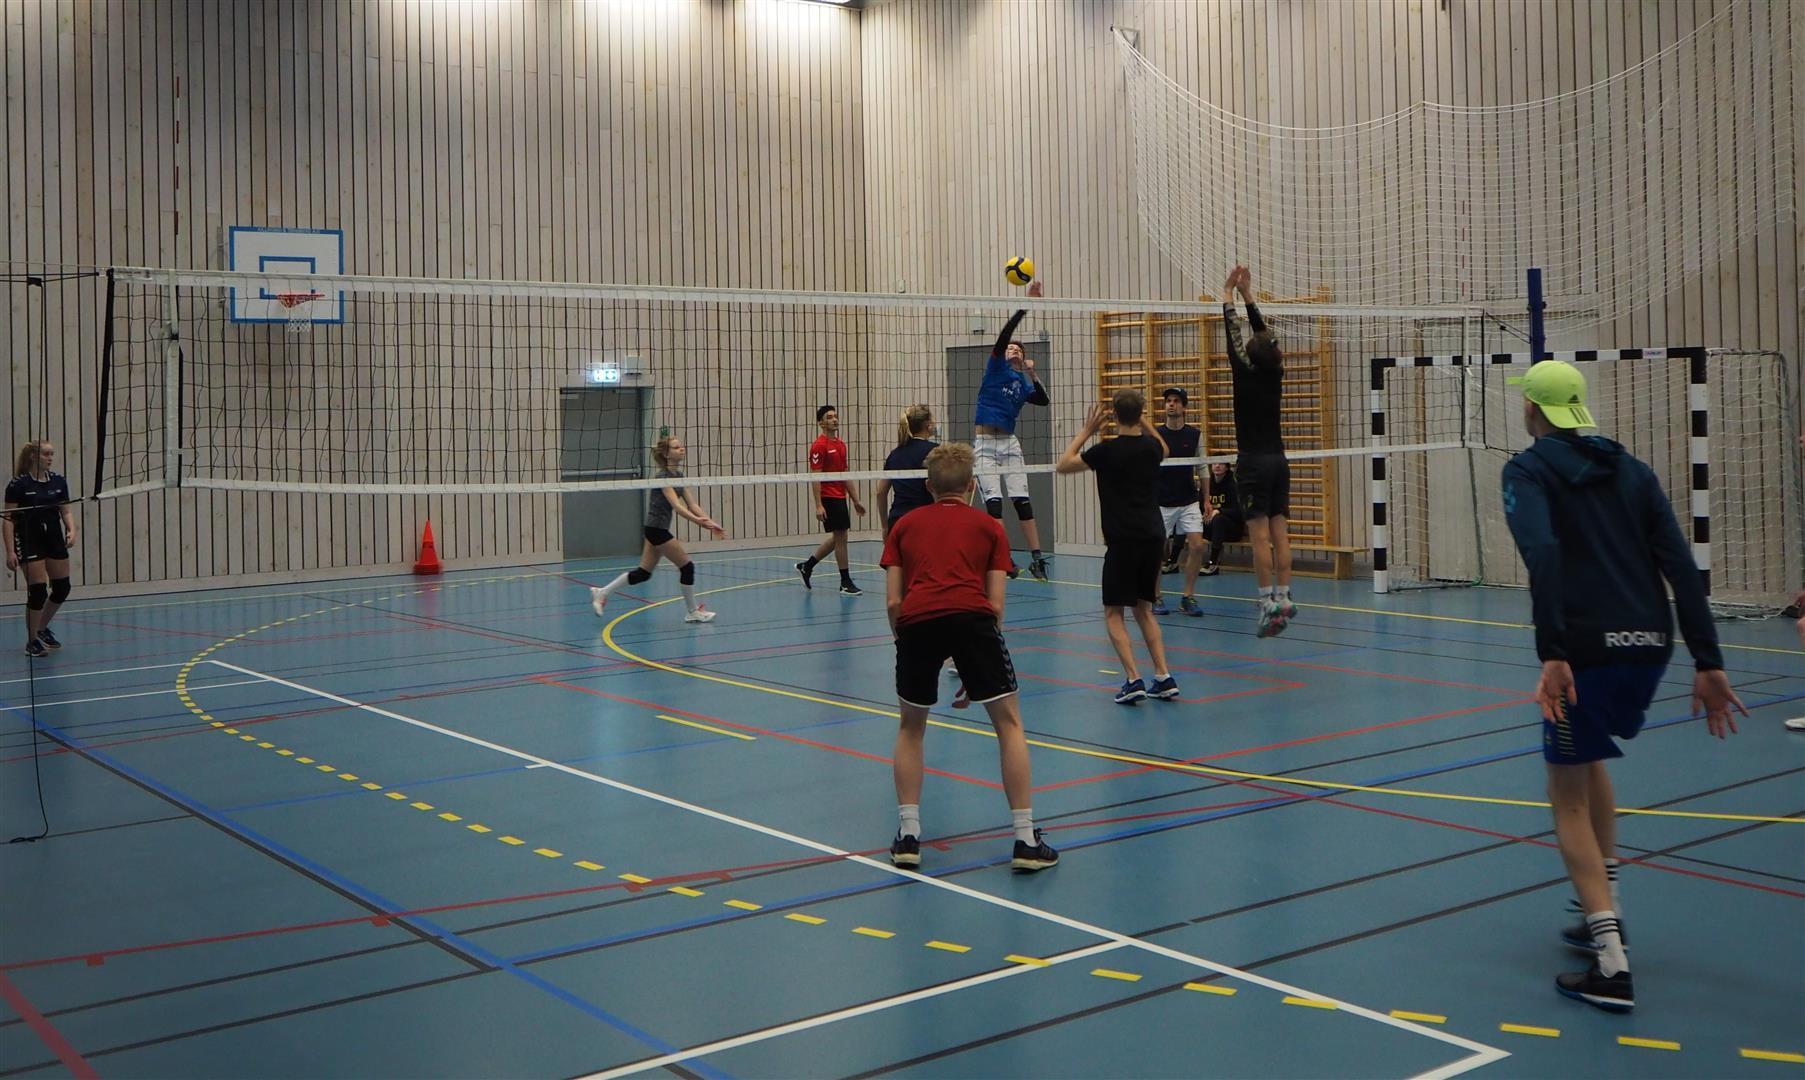 Volleyball net, Active shorts, Sports equipment, Field house, Wallyball, Player